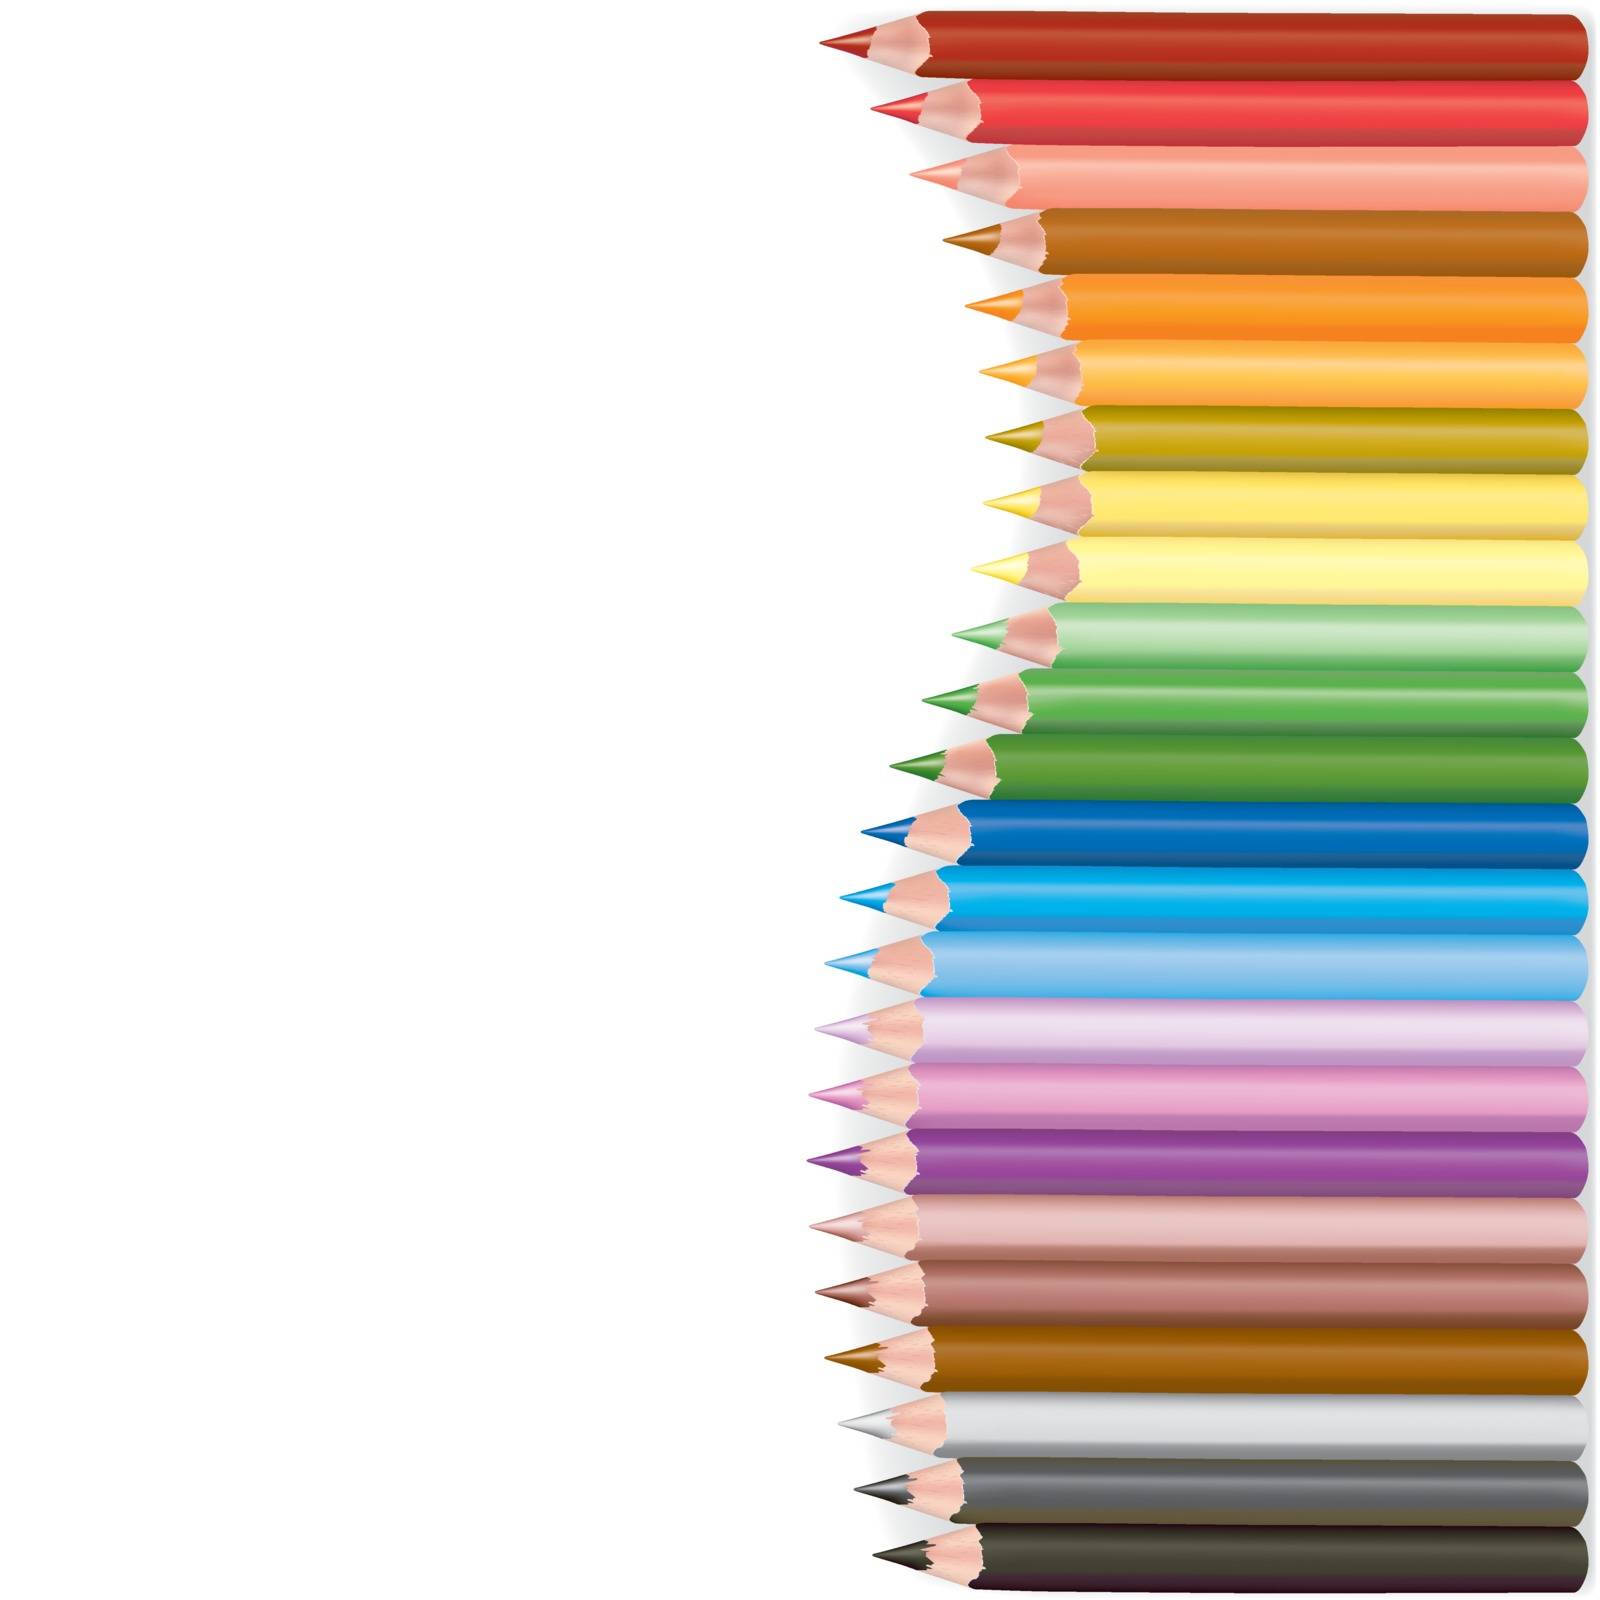 Crayons Wave Shape by illustratorCZ